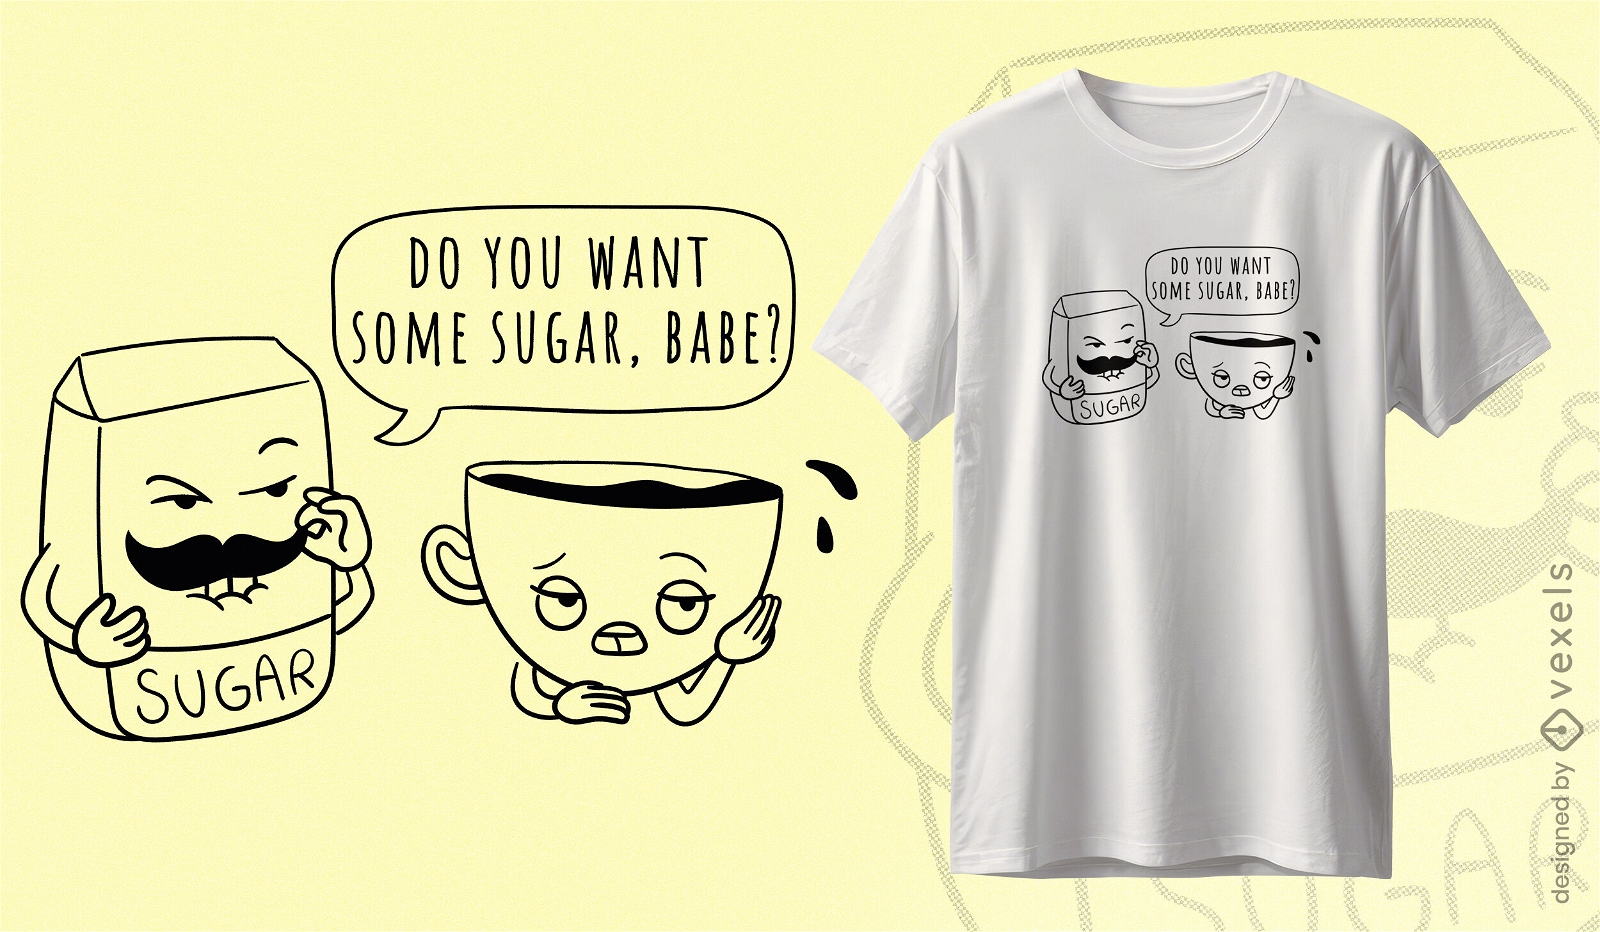 Flirty sugar t-shirt design